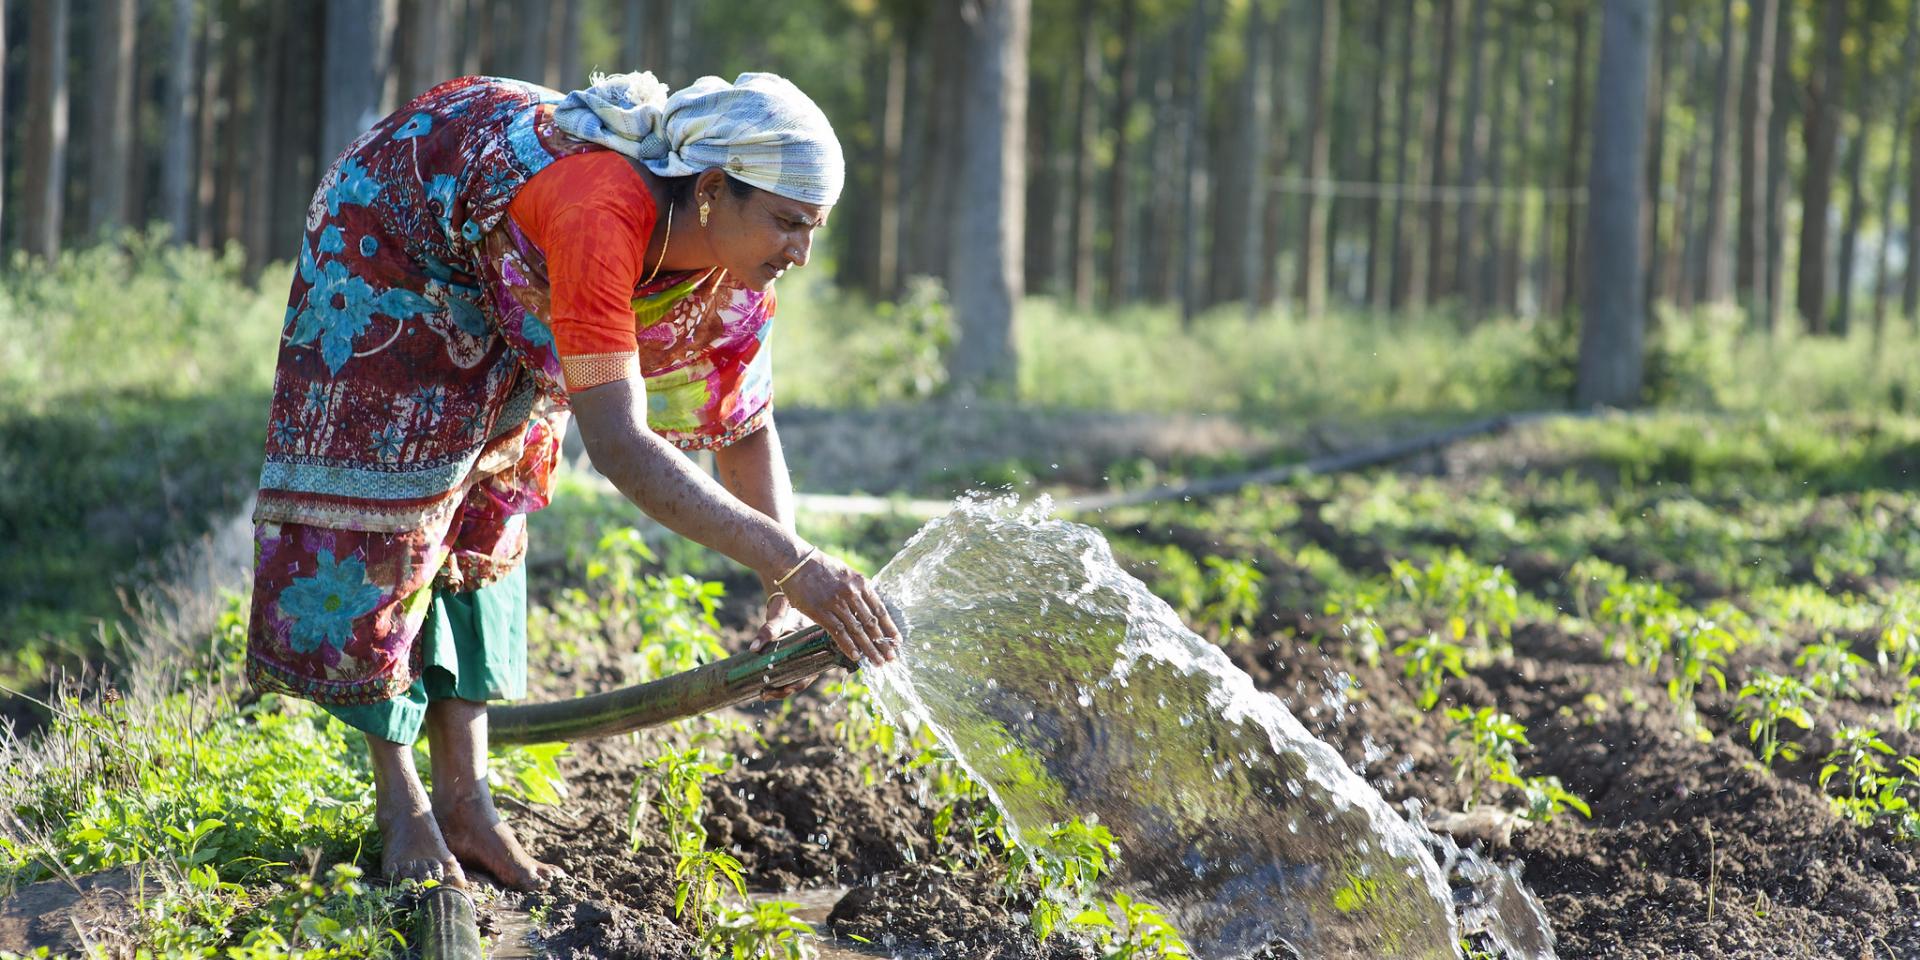 India - female farmer irrigates crops